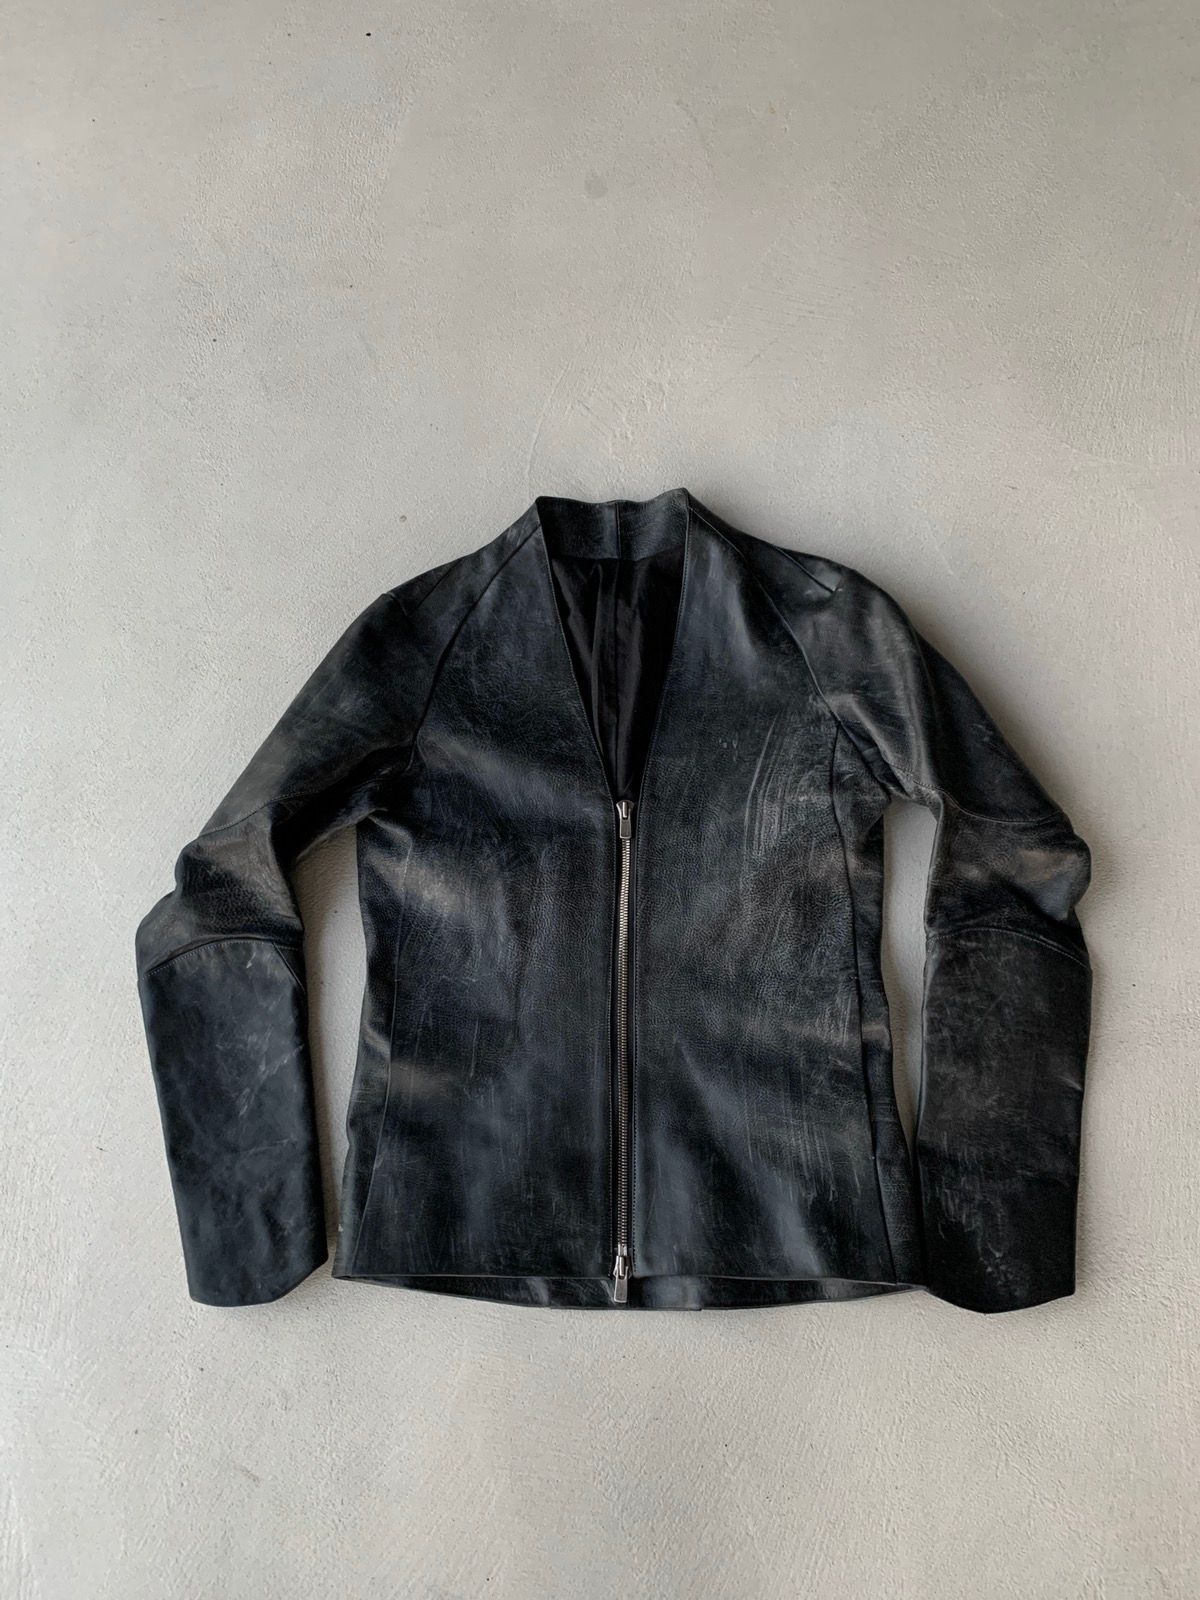 Devoa Devoa Leather jacket | Grailed